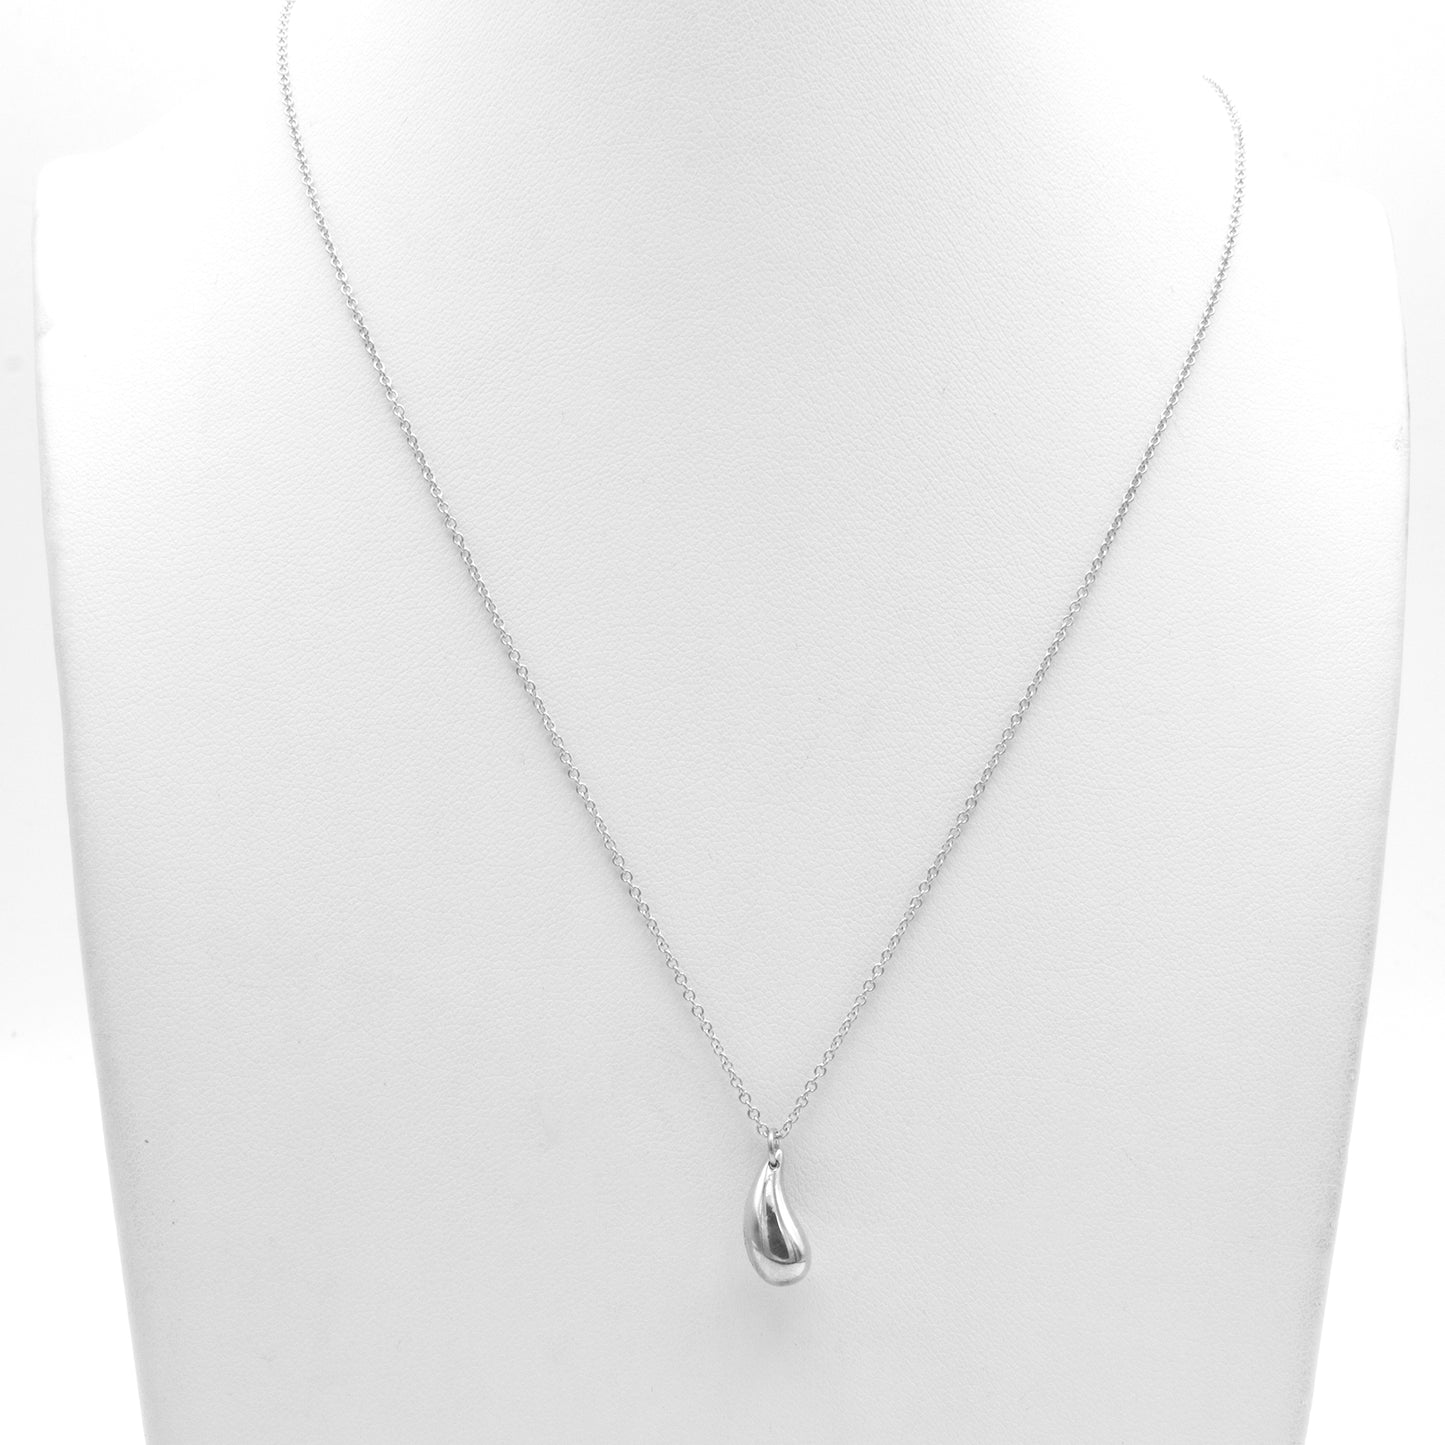 Tiffany & Co teardrop necklace